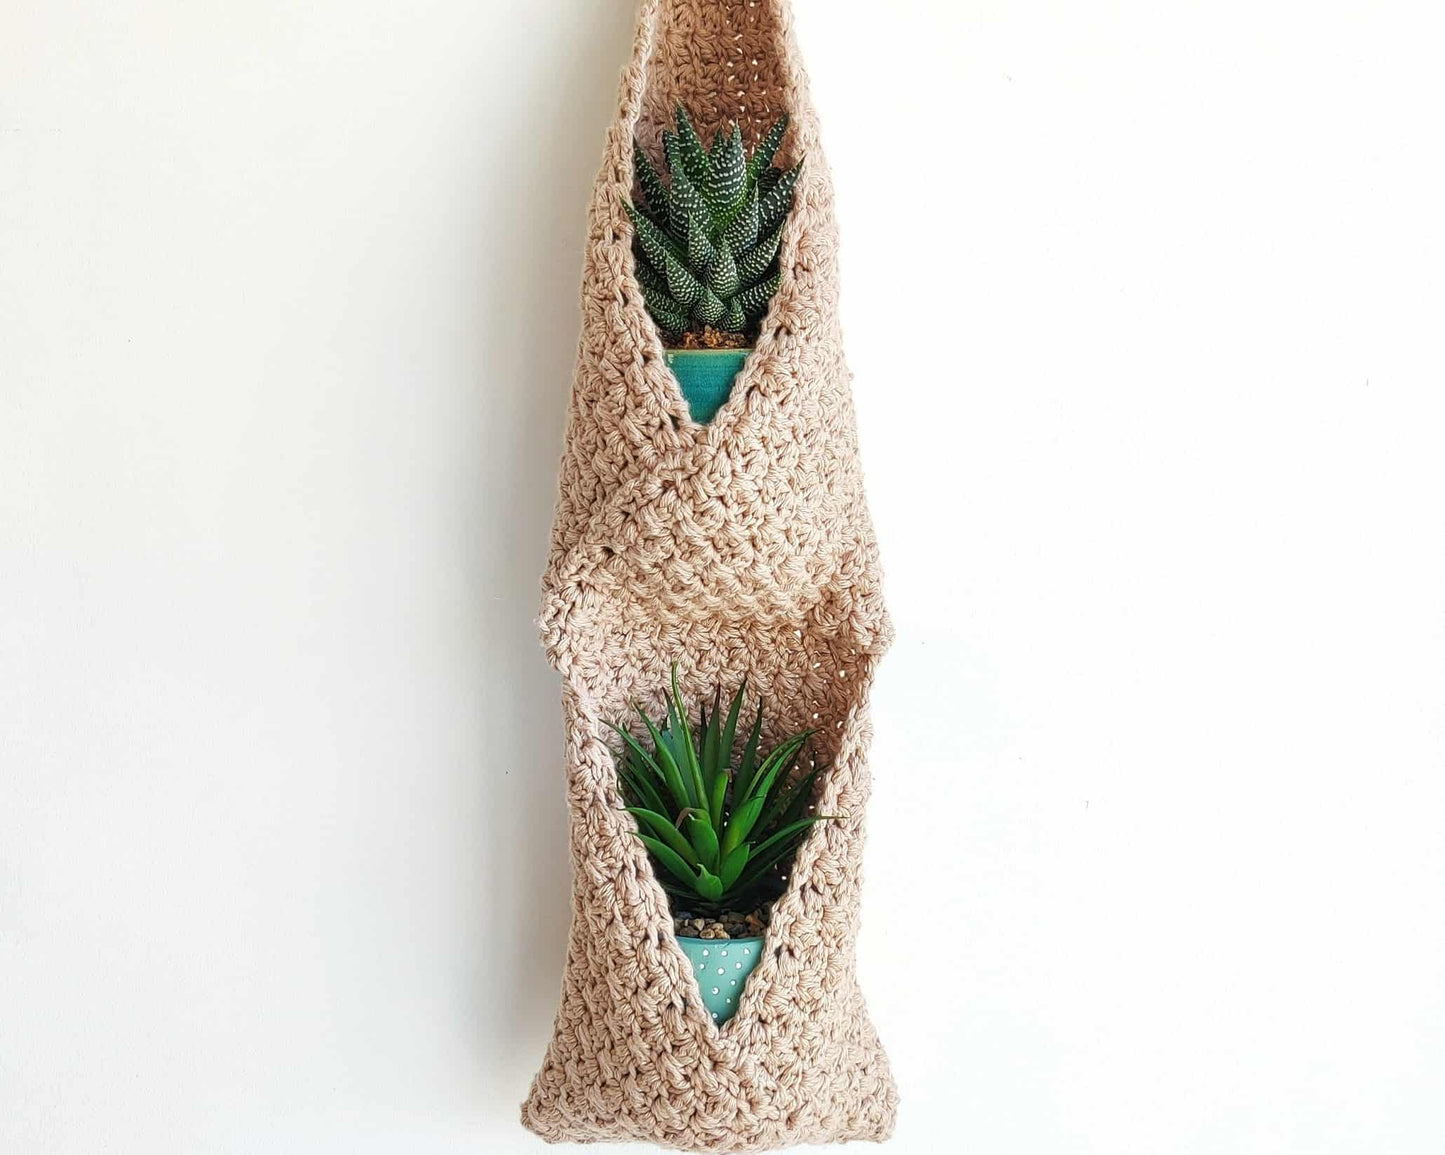 Suzette Double Hanging Basket Crochet Pattern by Agat Rottman